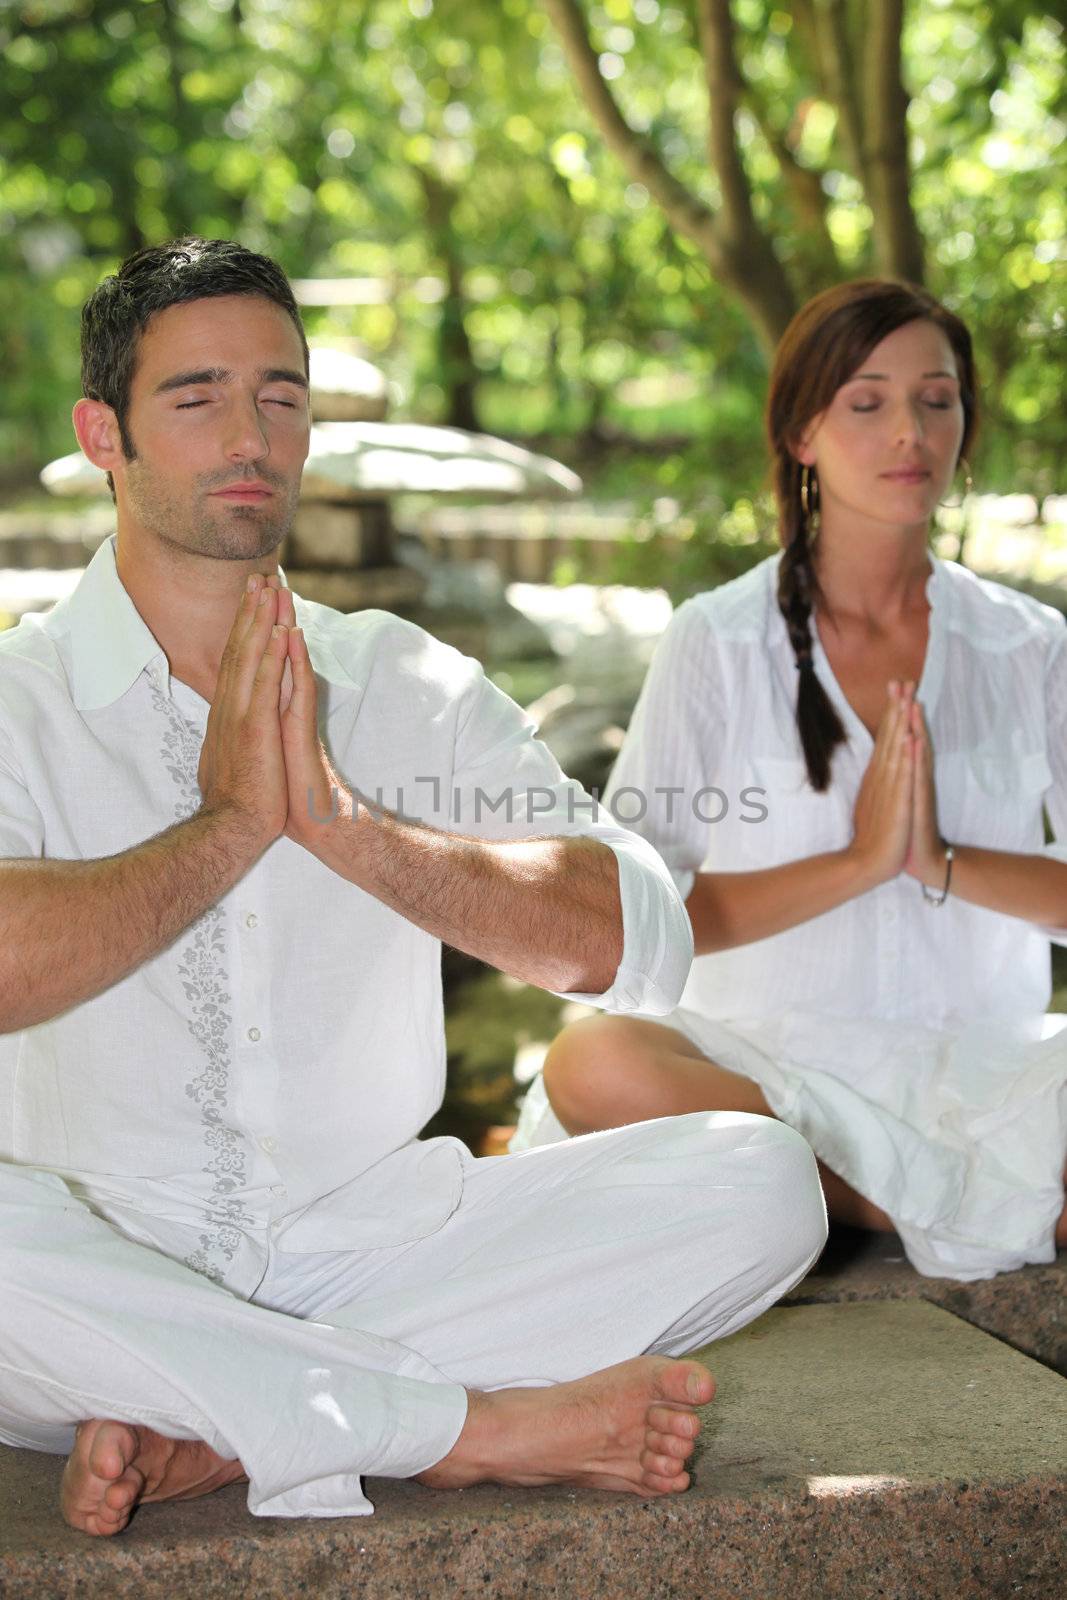 Couple meditating in stone garden